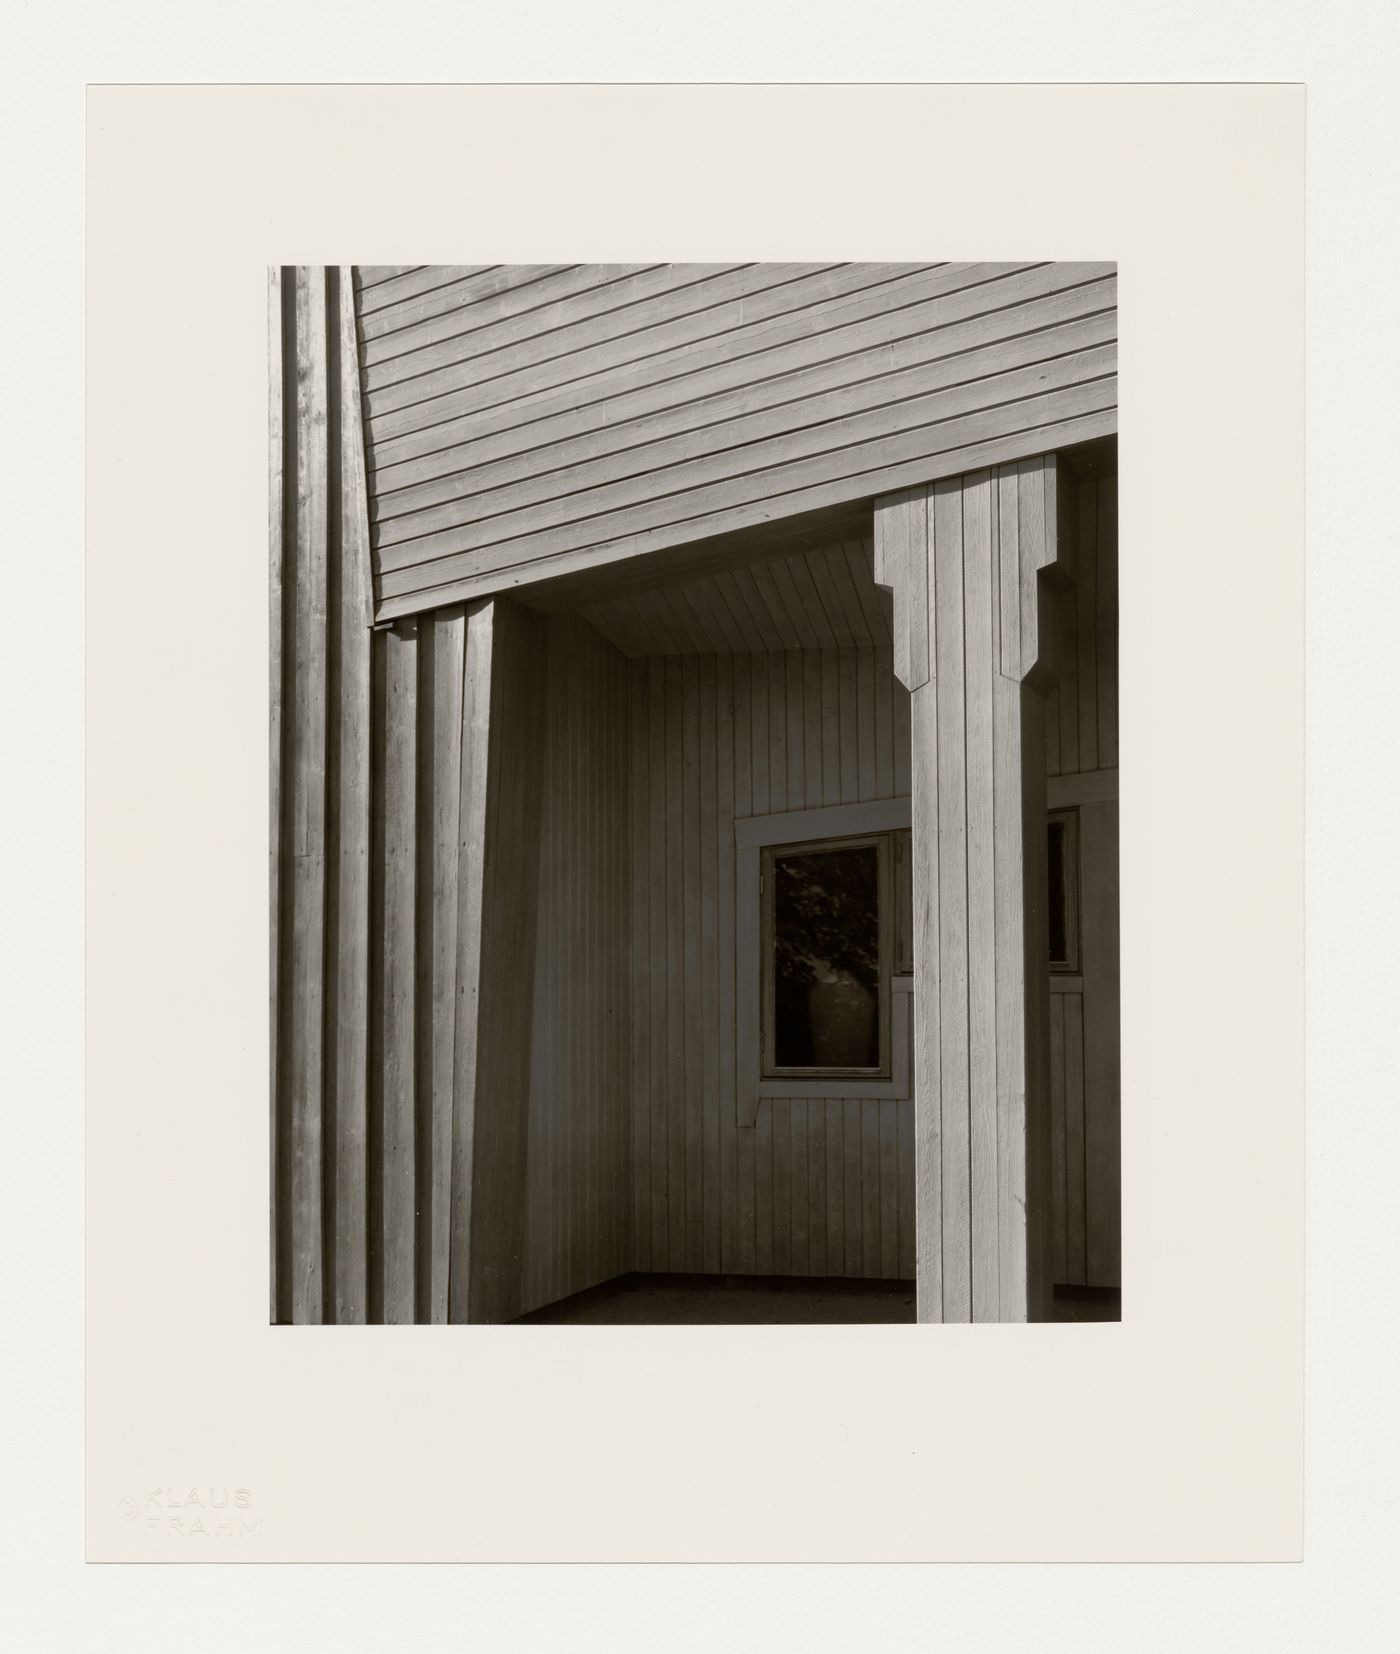 Detail of the wooden porch [?] of the Jo[e]berga Community Centre [?], Rudolf Steiner Teachers College, Järna, Sweden